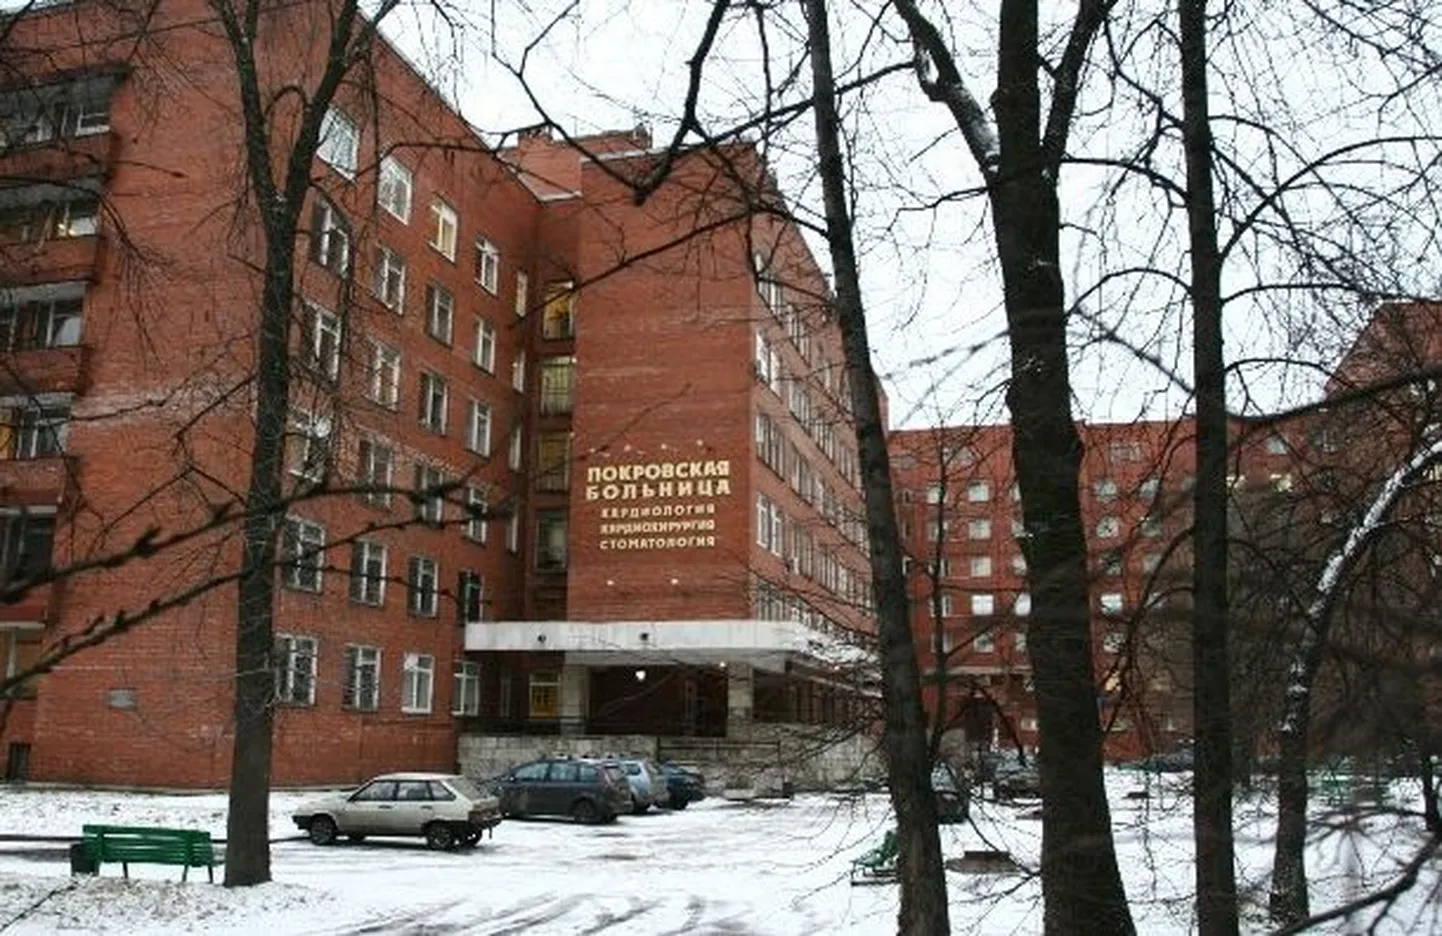 Peterburi Pokrovski haigla